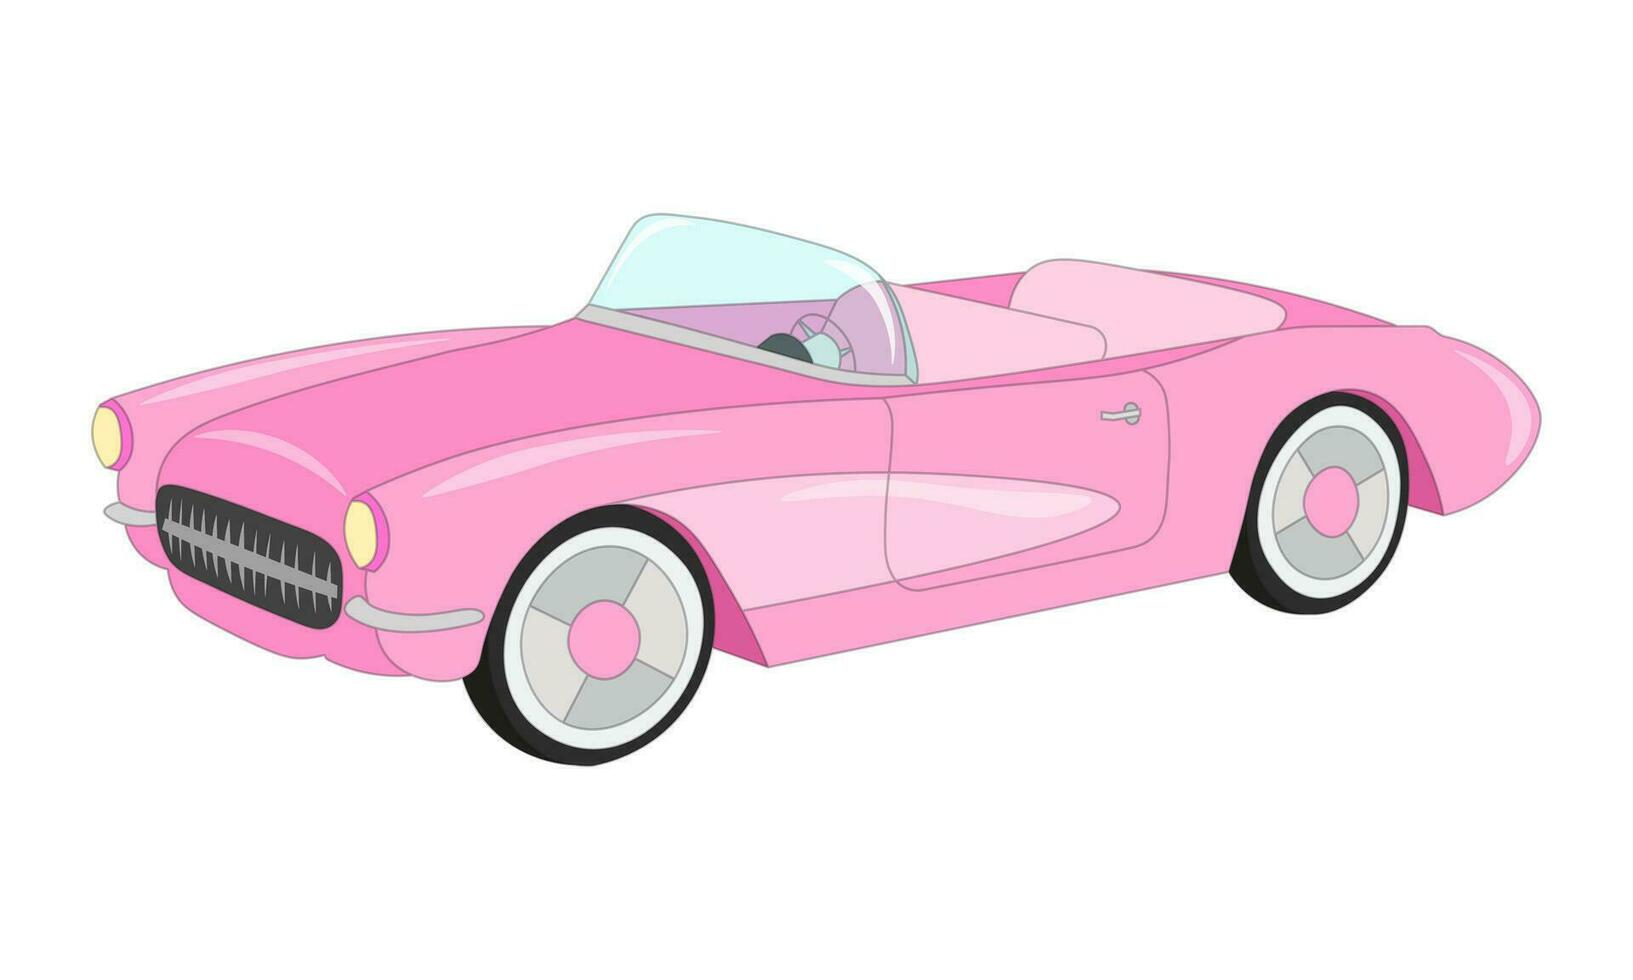 Cartoon illustration of the vintage pink car vector